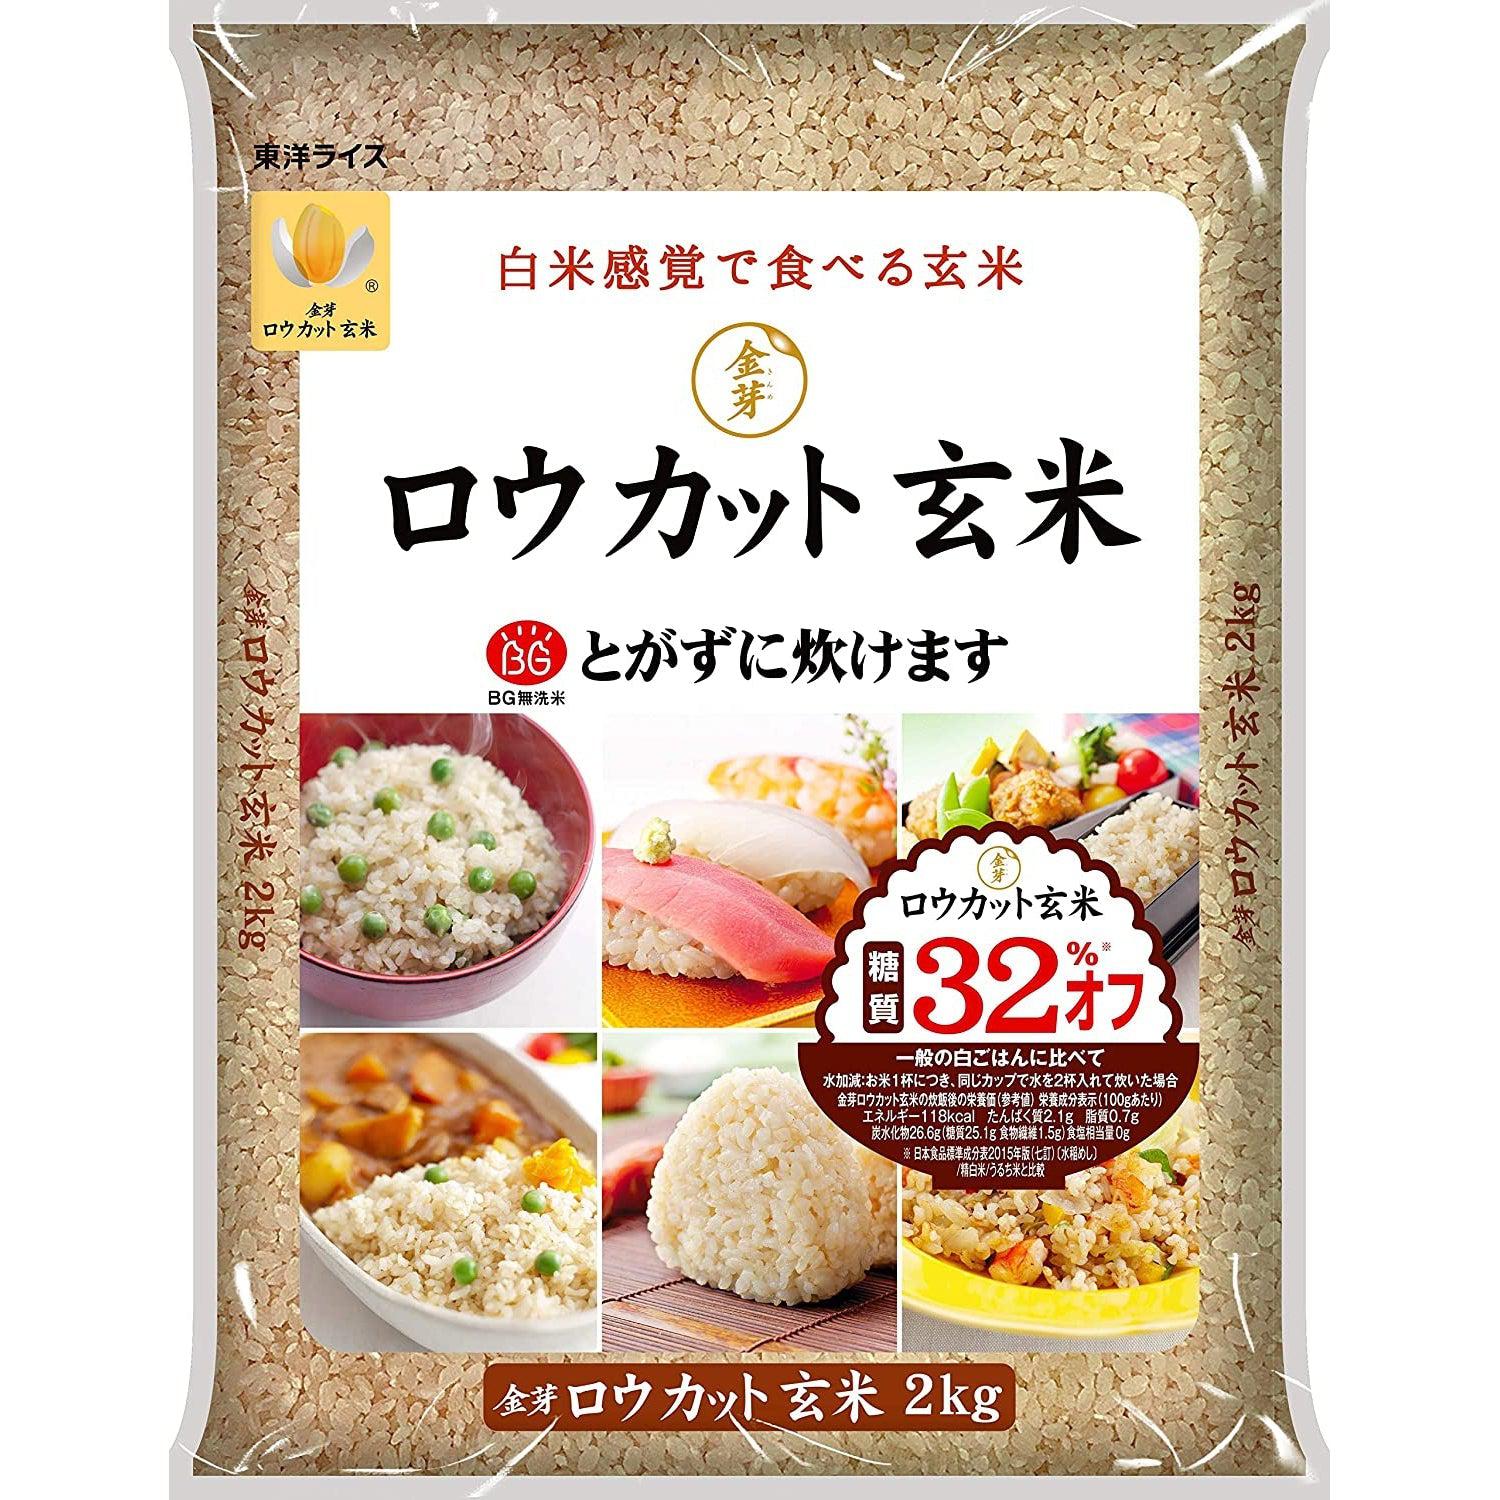 Toyo Rice Kinmemai Quick Cooking Japanese Brown Rice 2kg, Japanese Taste